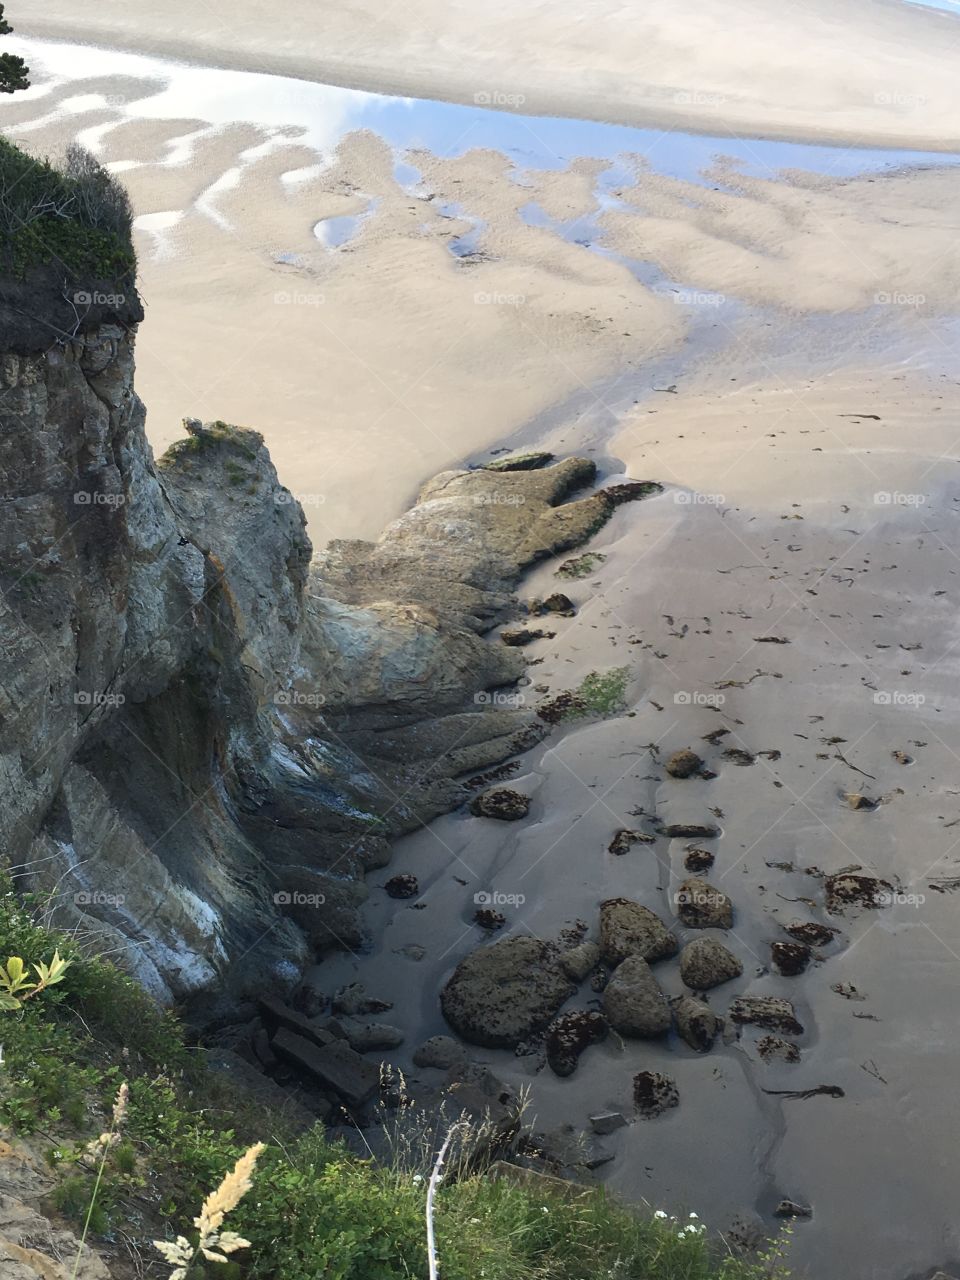 Beach rock that looks like a foot